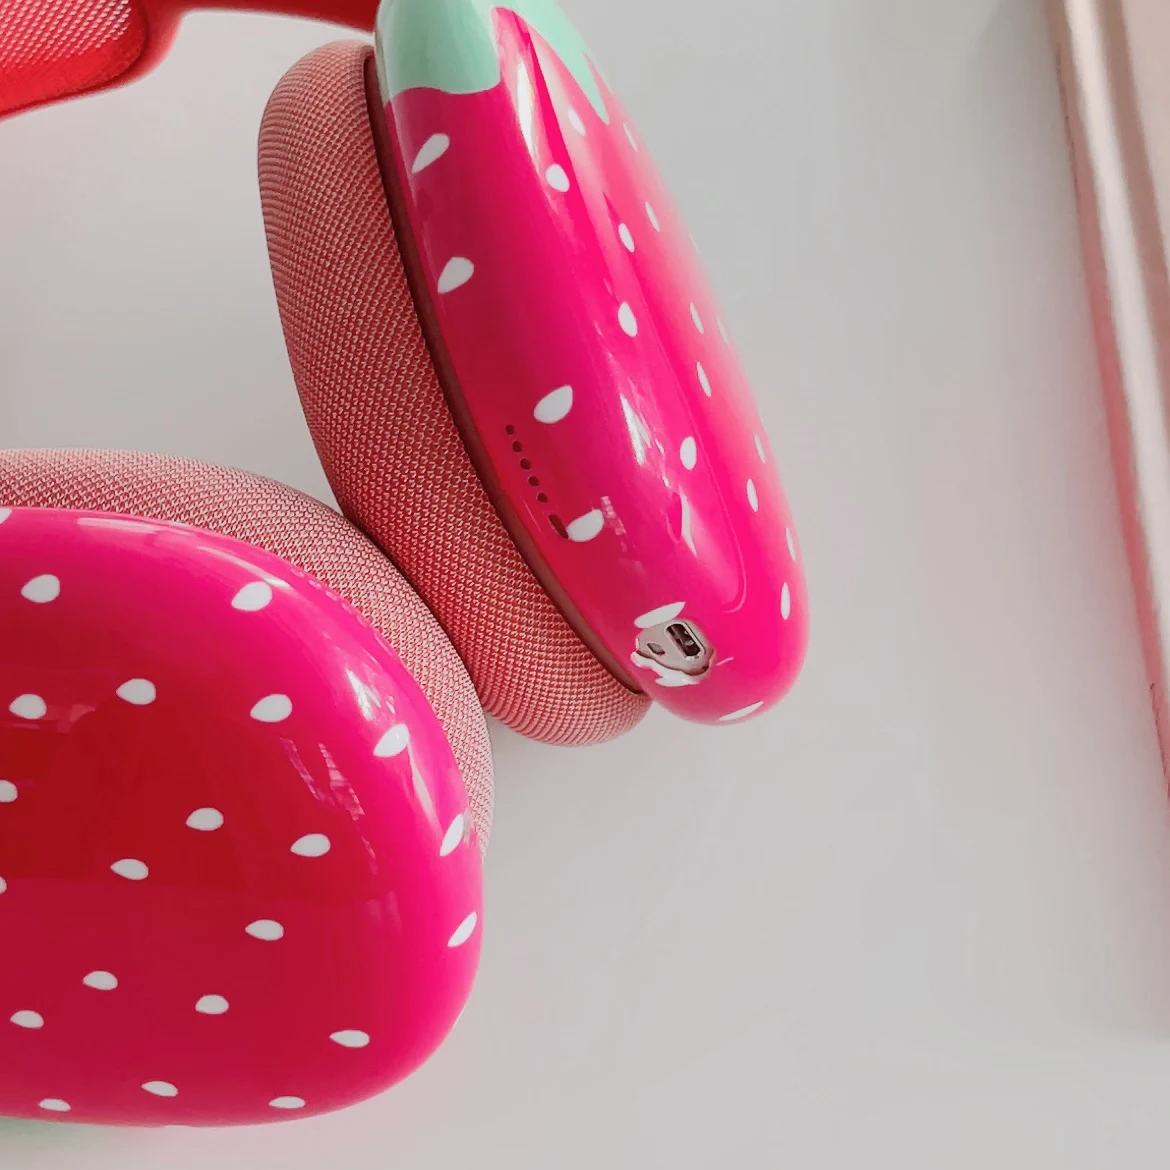 Strawberry Headphone Covers